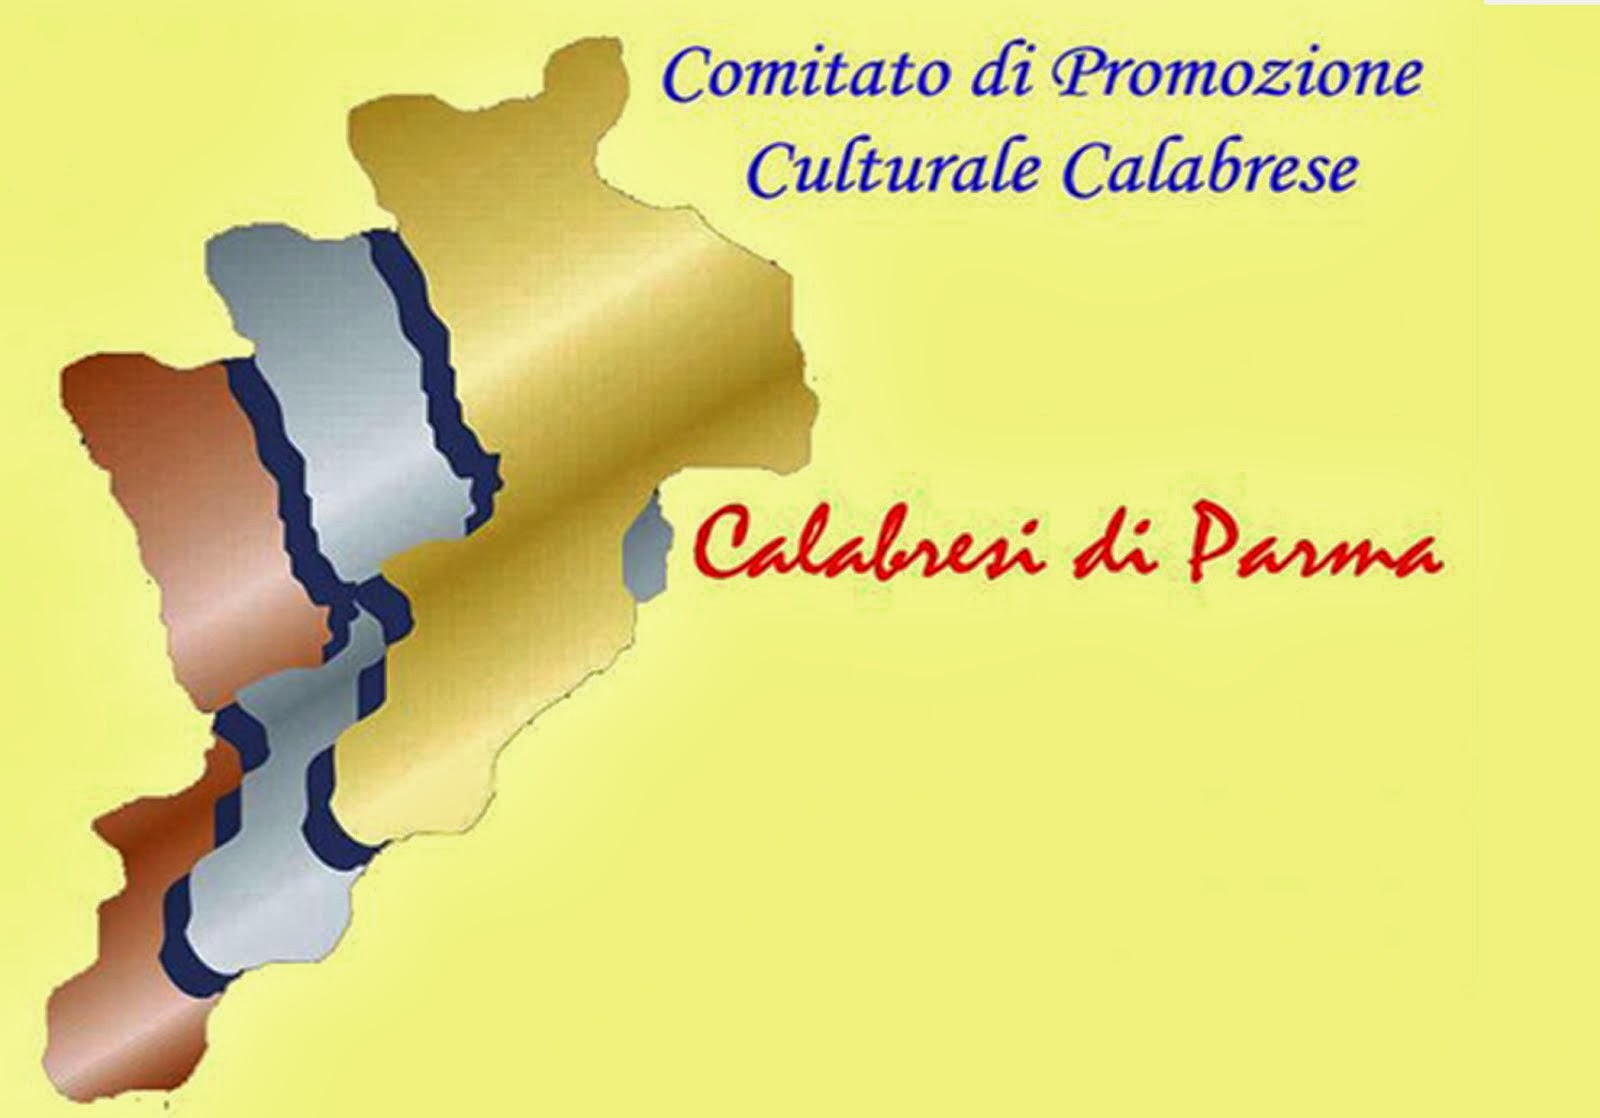 Calabresi di Parma